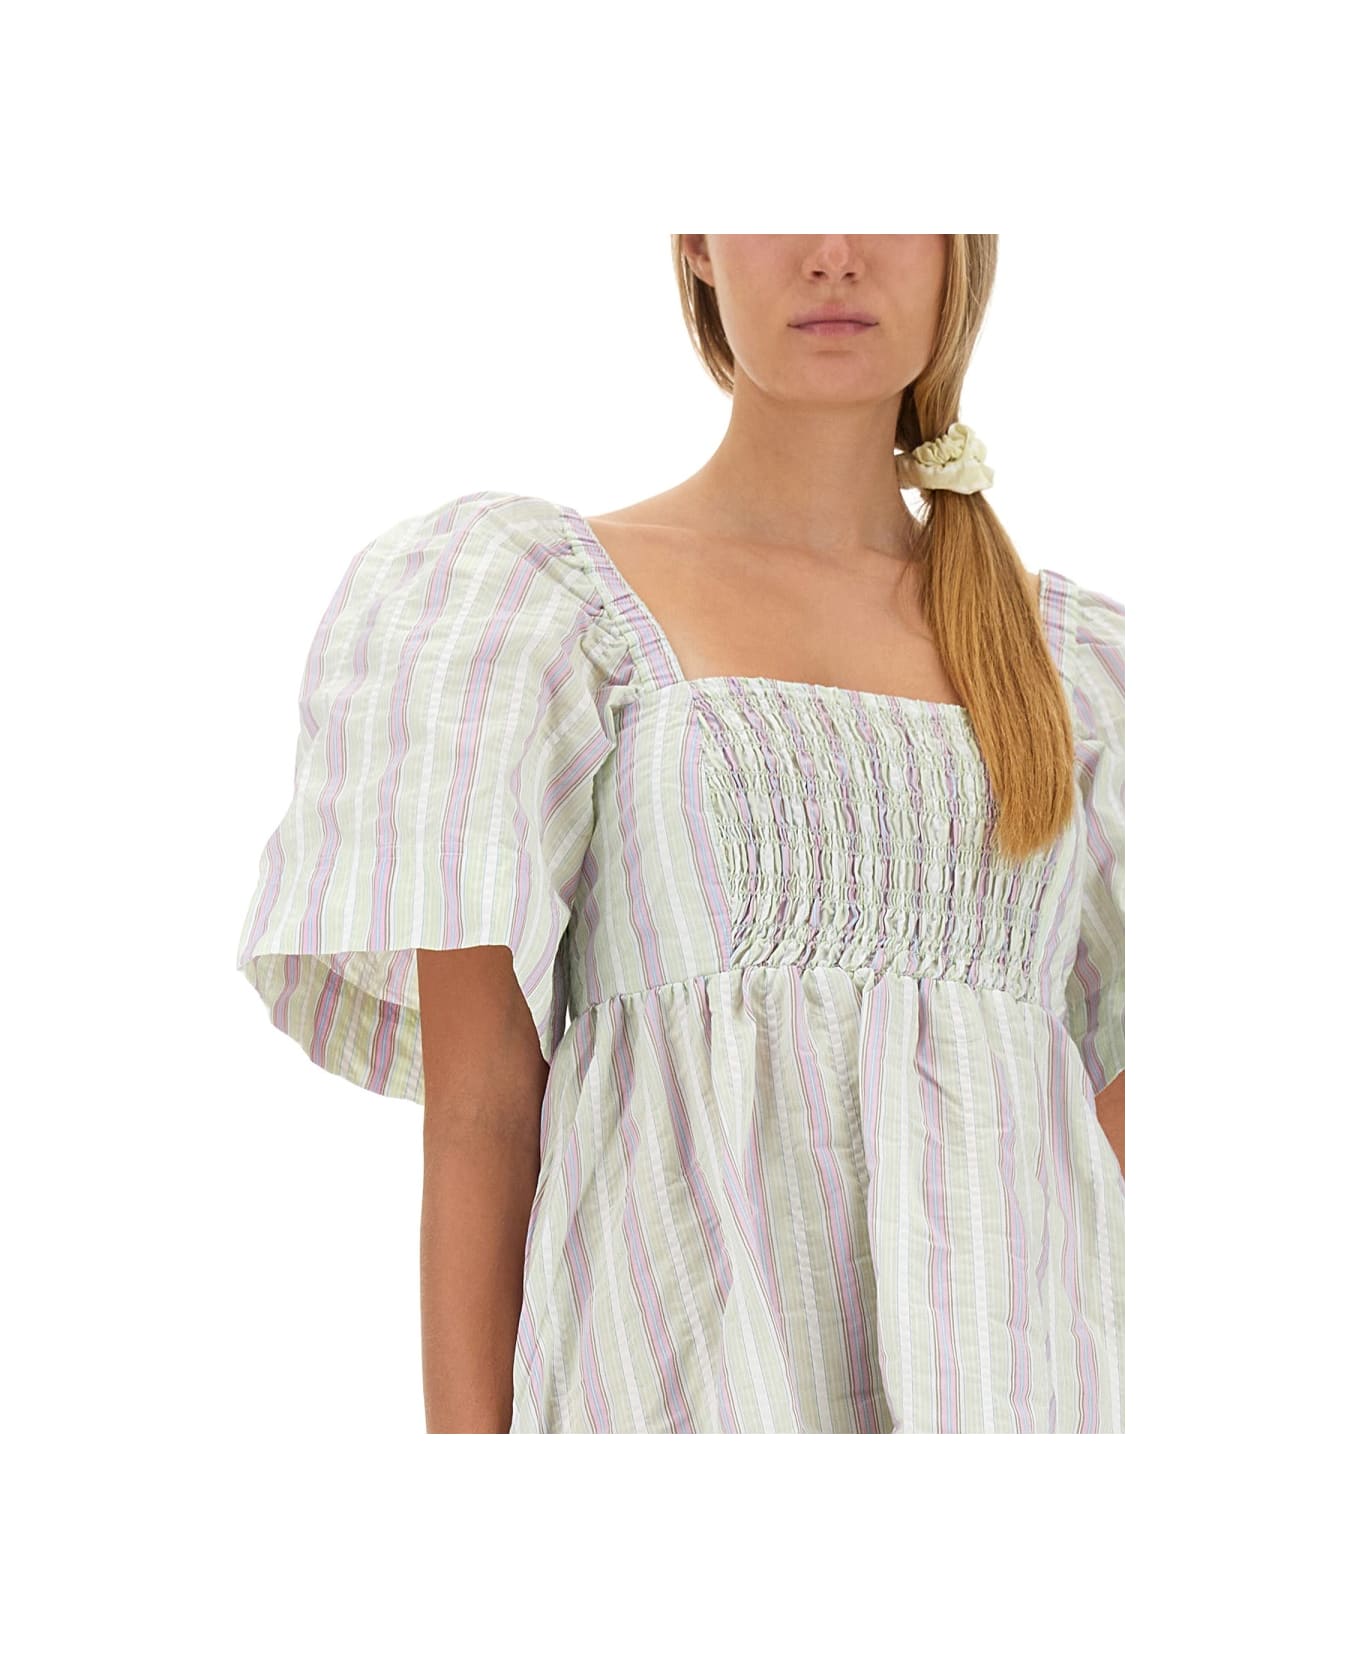 Ganni Dress With Stripe Pattern - White